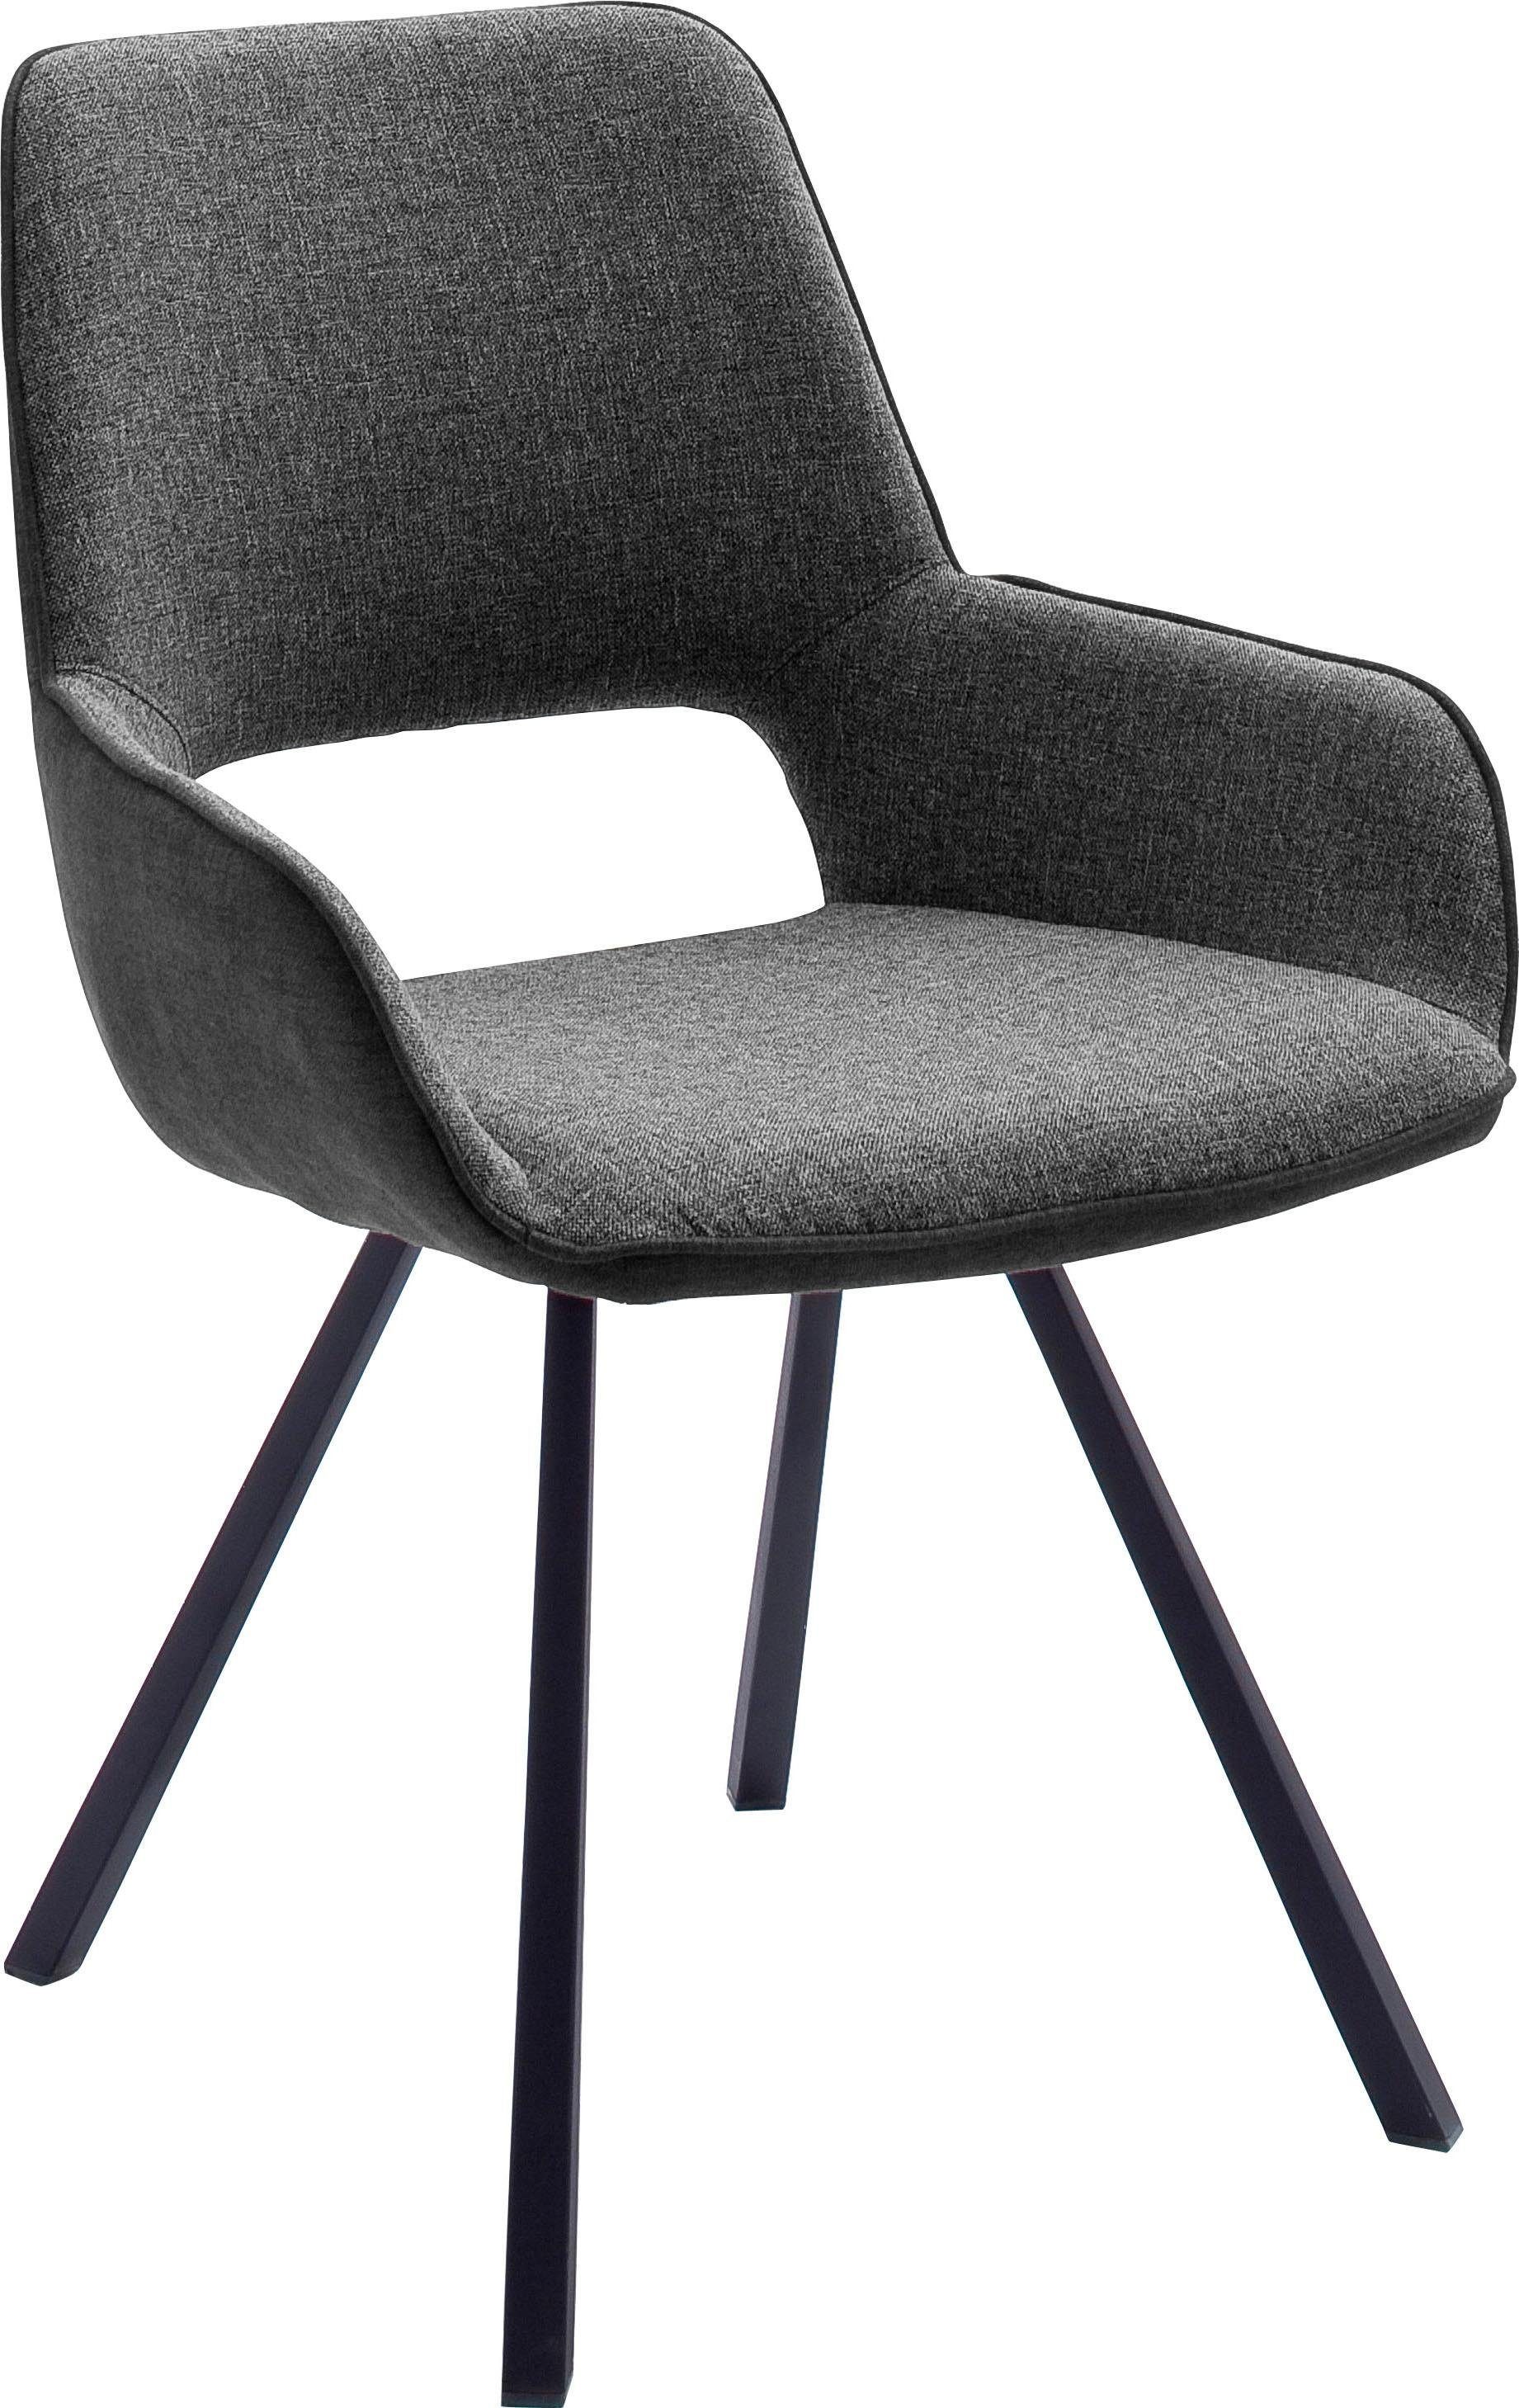 MCA bis furniture (Set, charcoal Kg Stuhl Parana 120 charcoal belastbar St), | 2 4-Fußstuhl